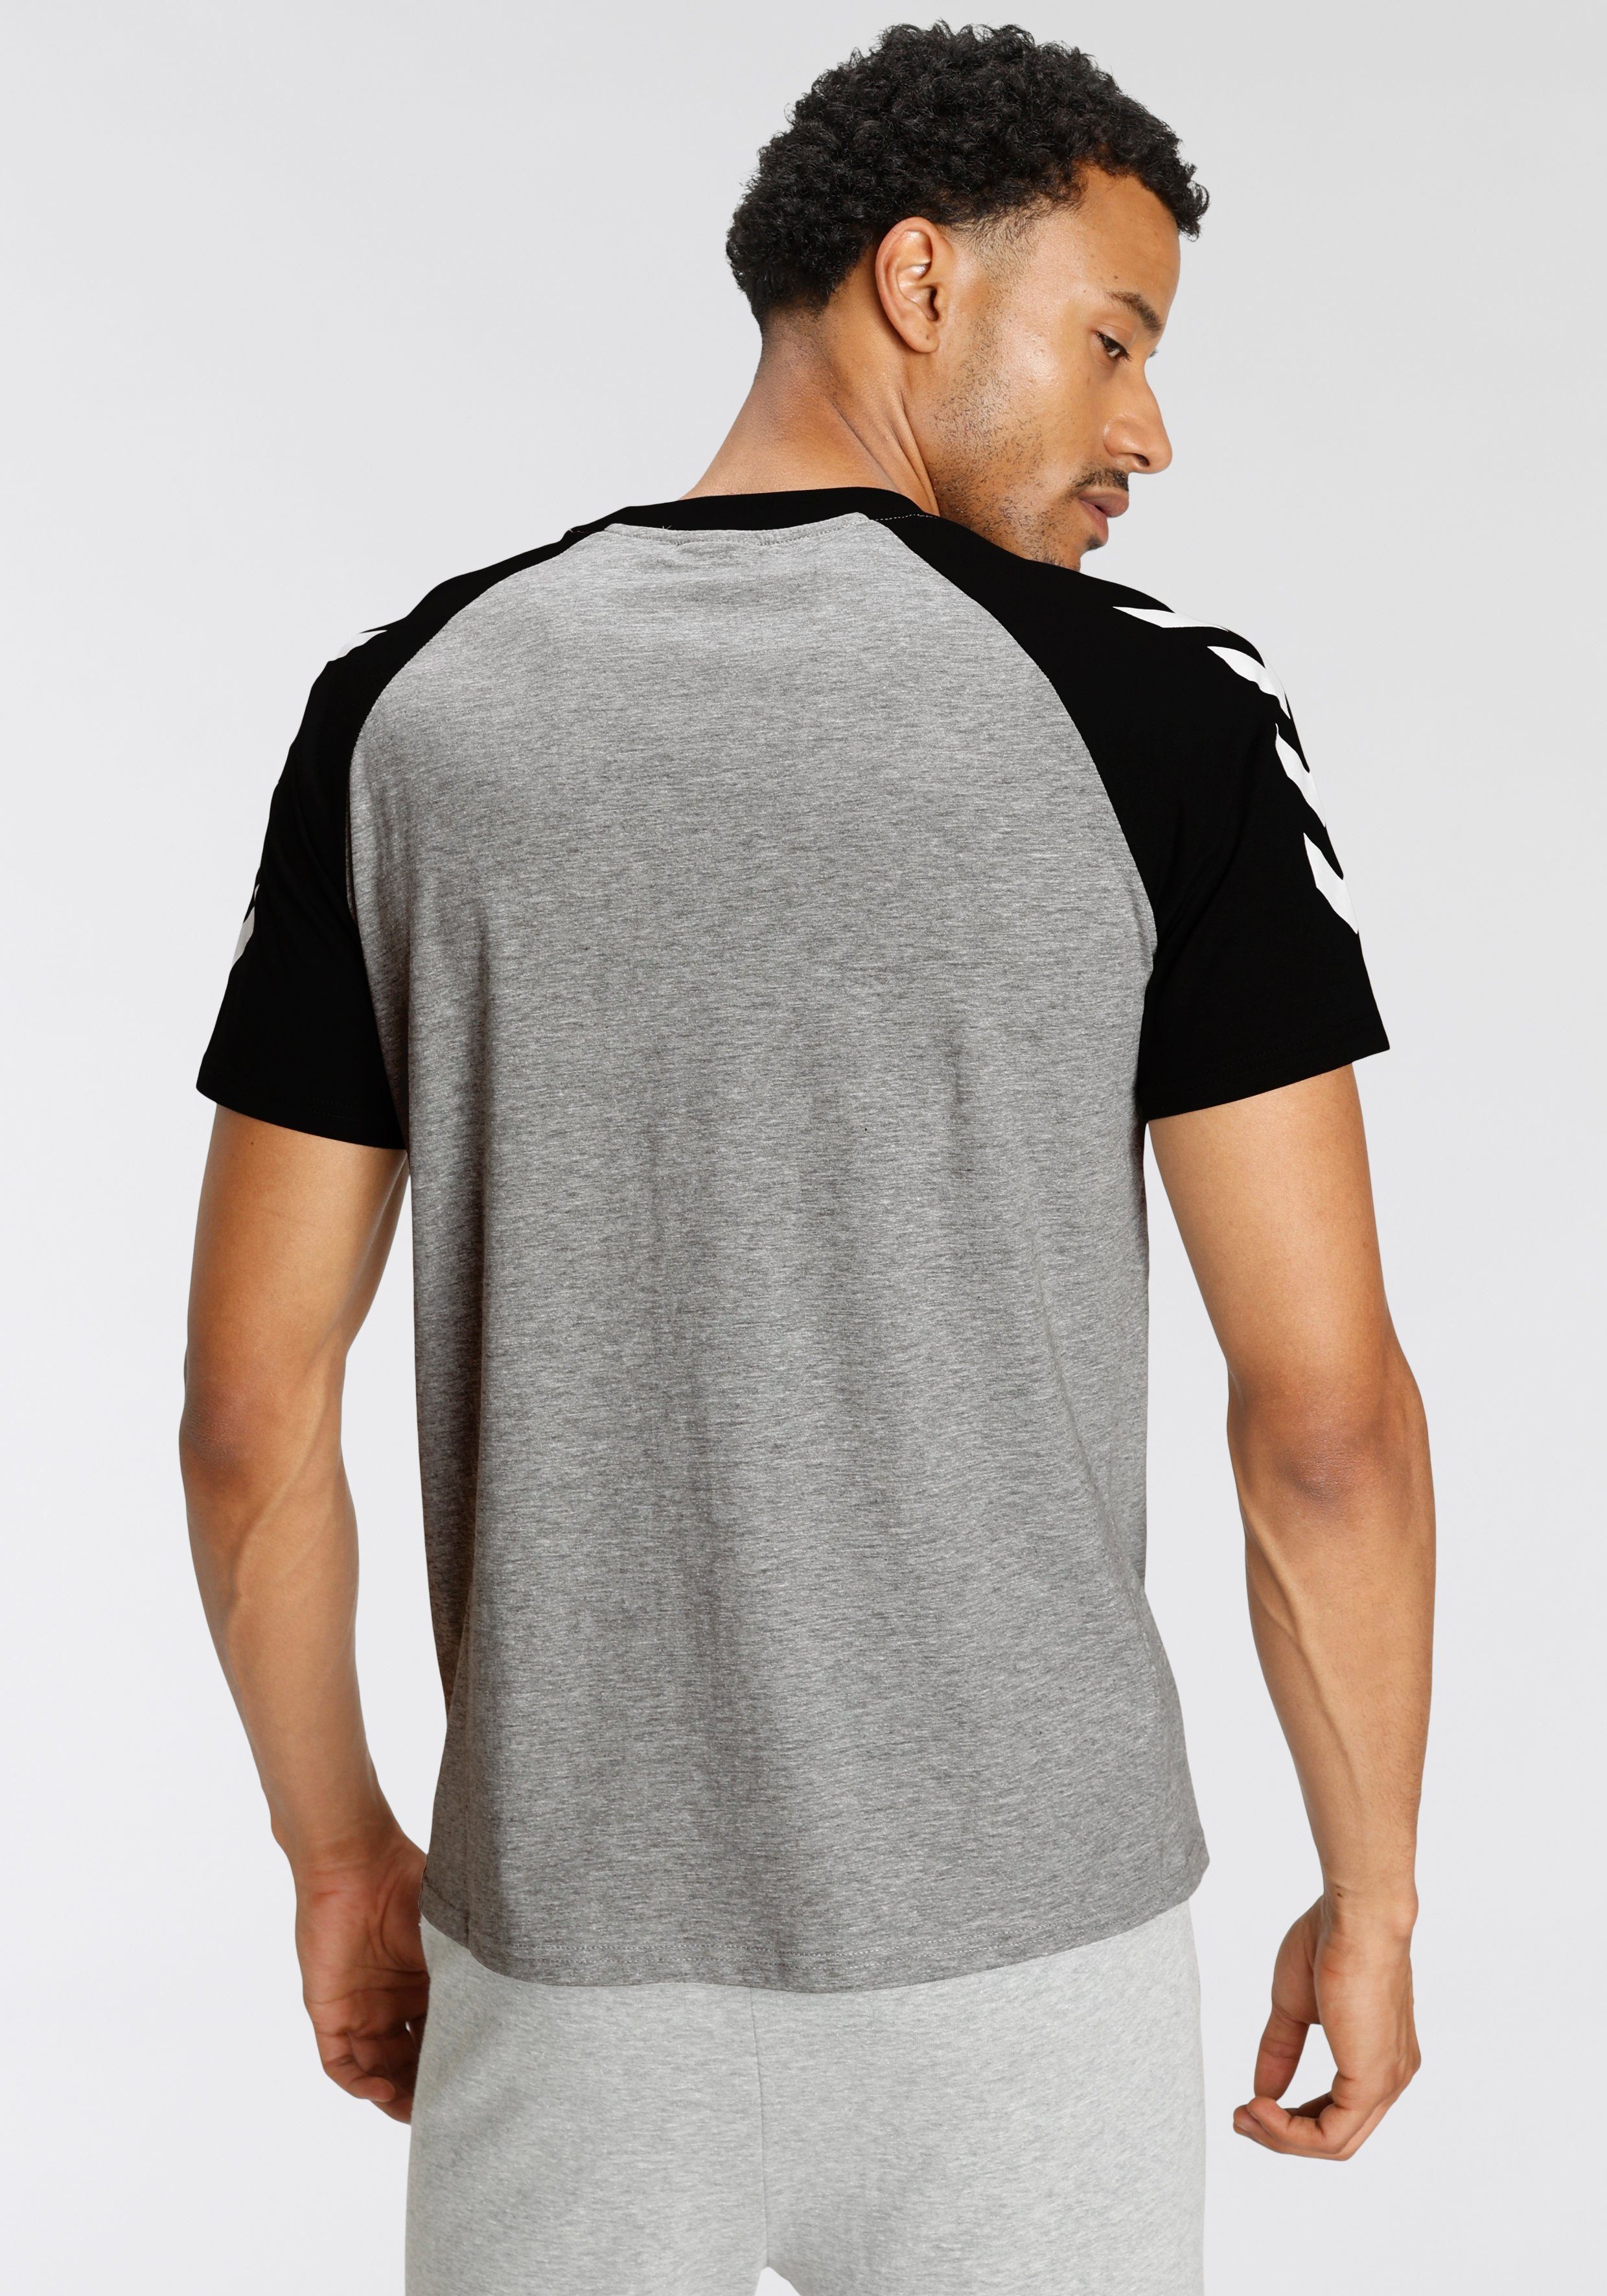 grau-schwarz hummel T-Shirt